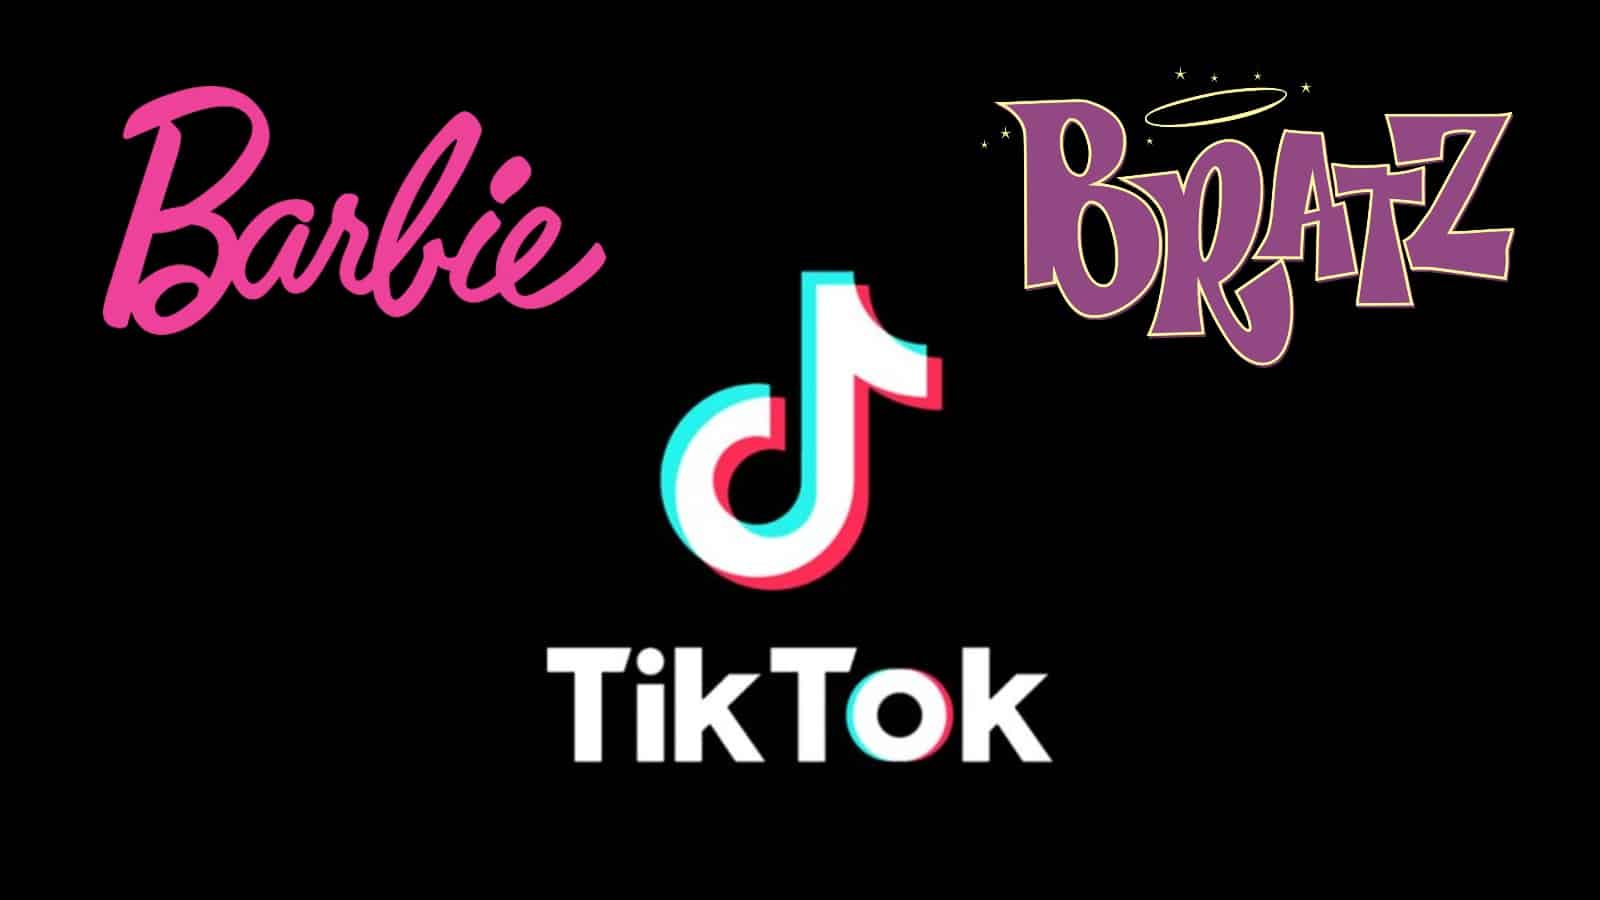 TikTok Barbie and Bratz logos